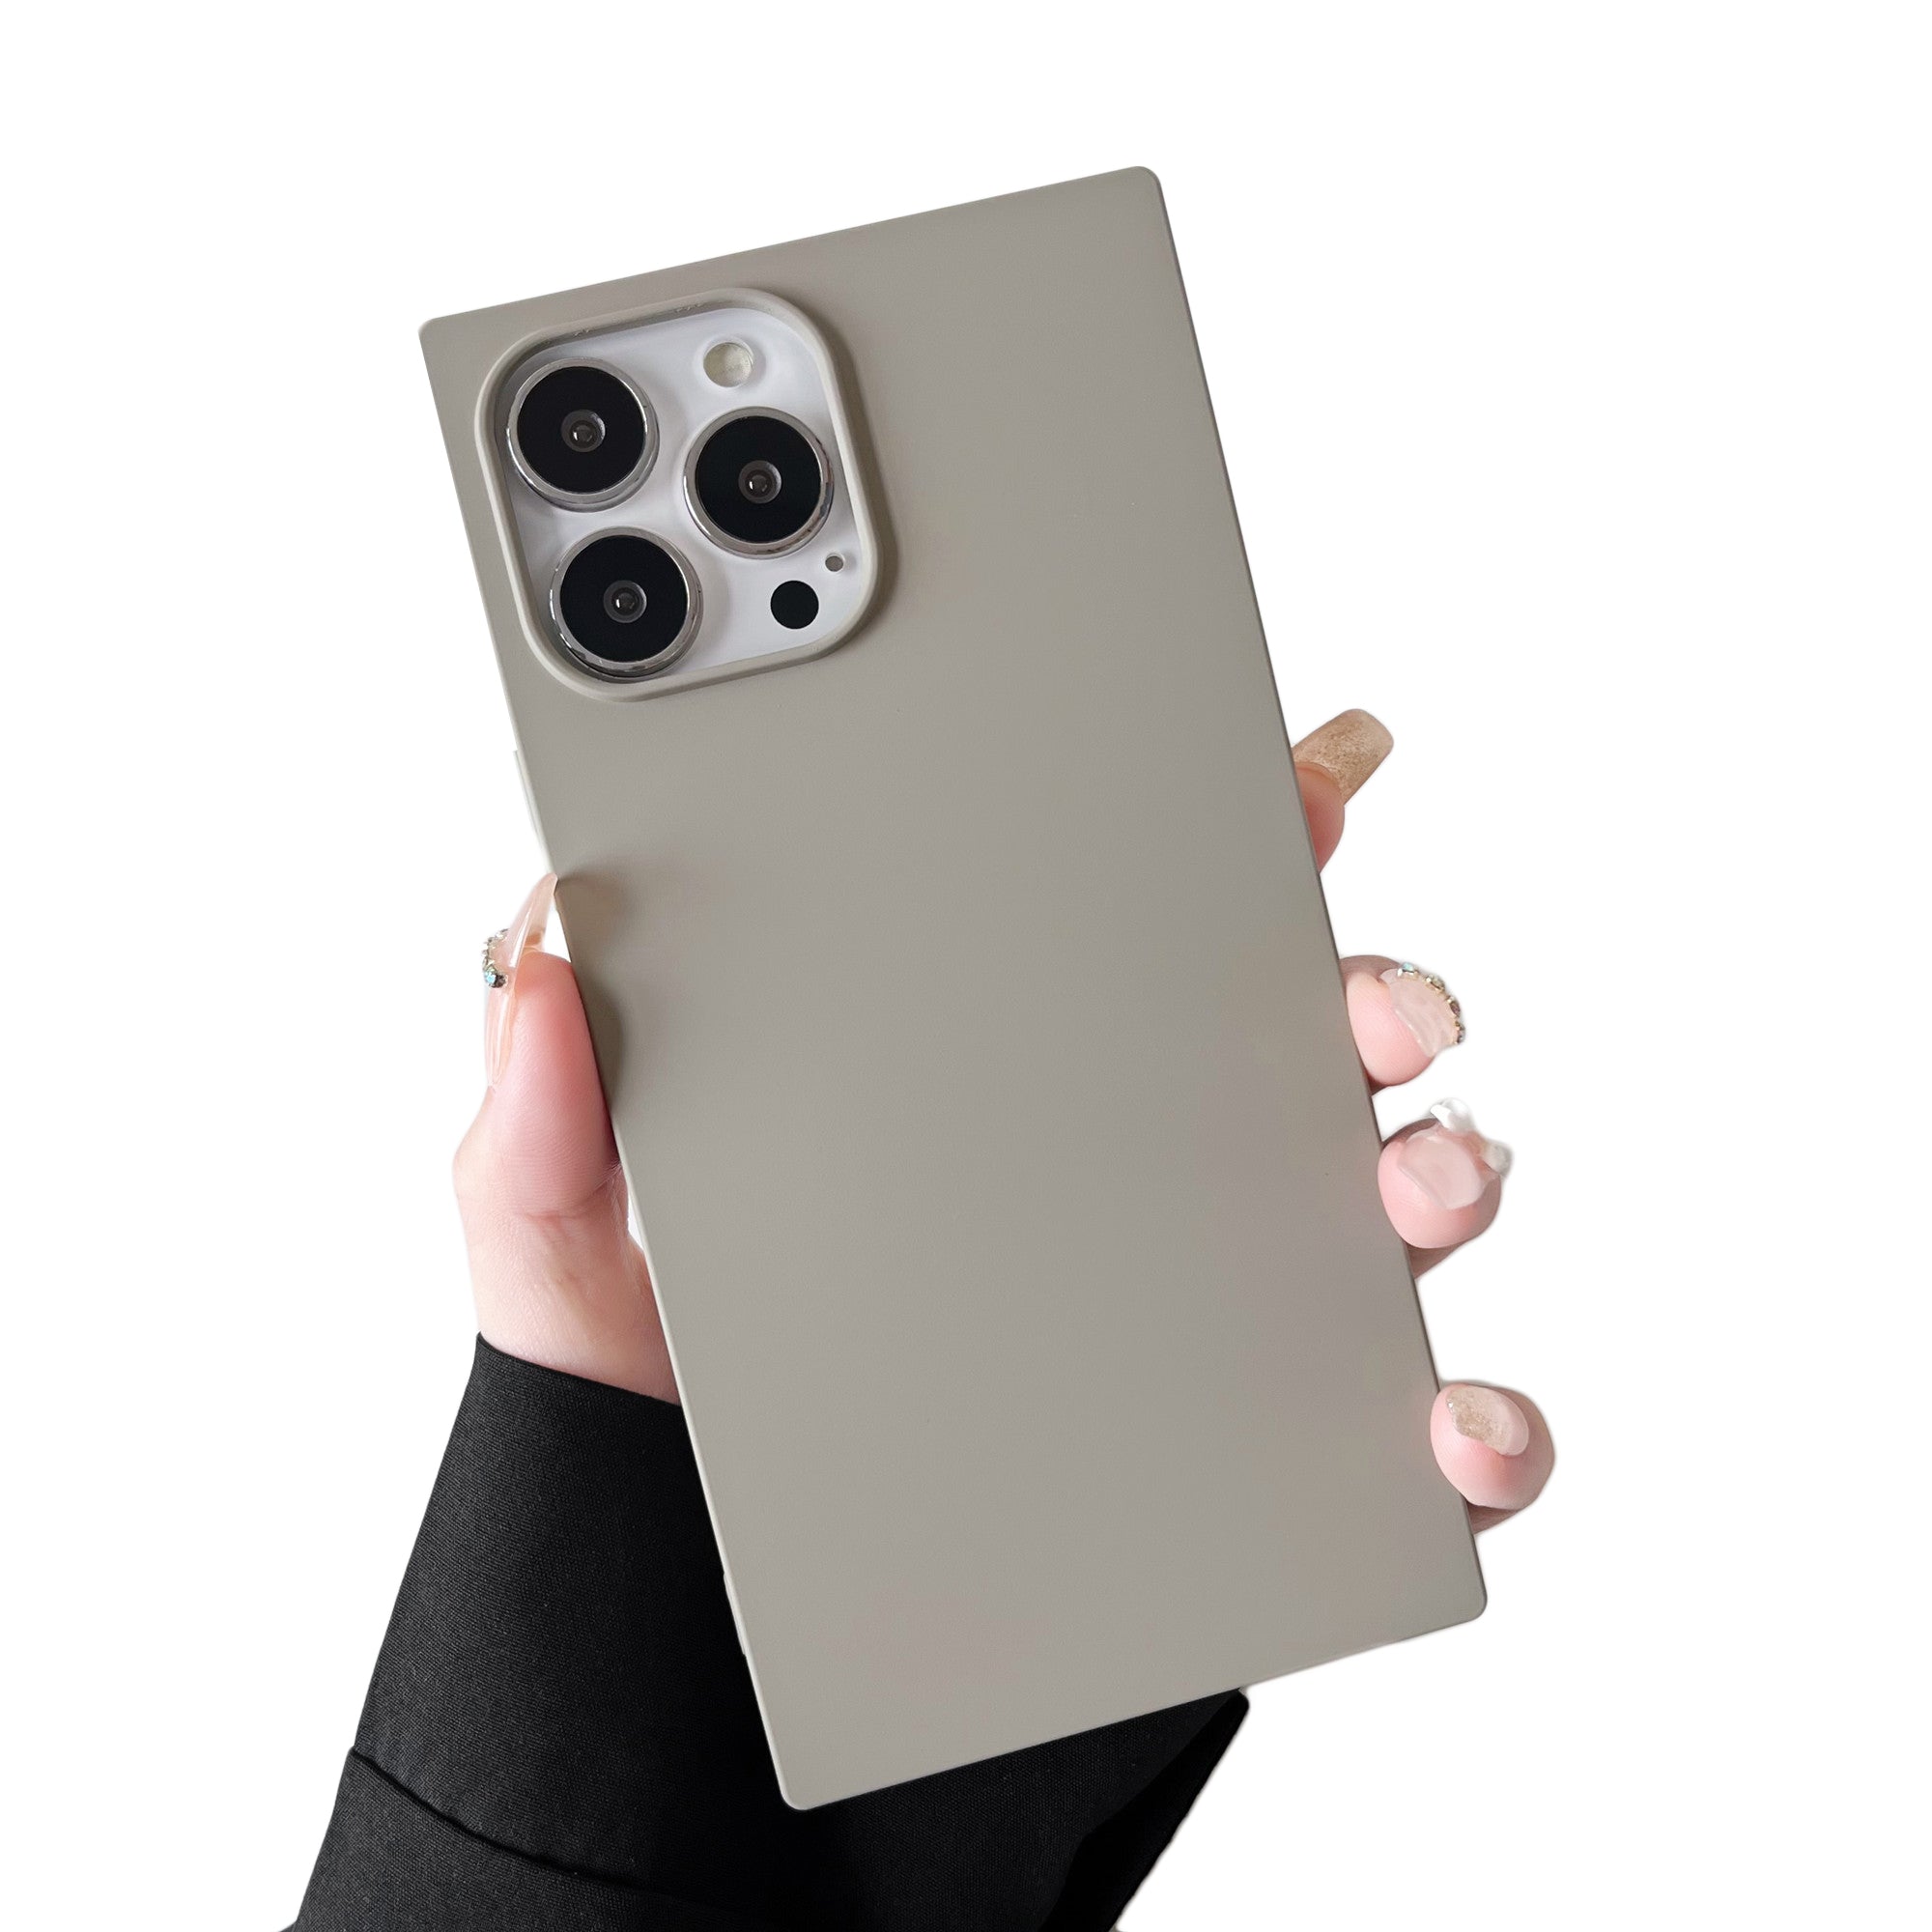 iPhone 12 Pro Max Case Square Silicone Neutral Color (Asphalt Gray)